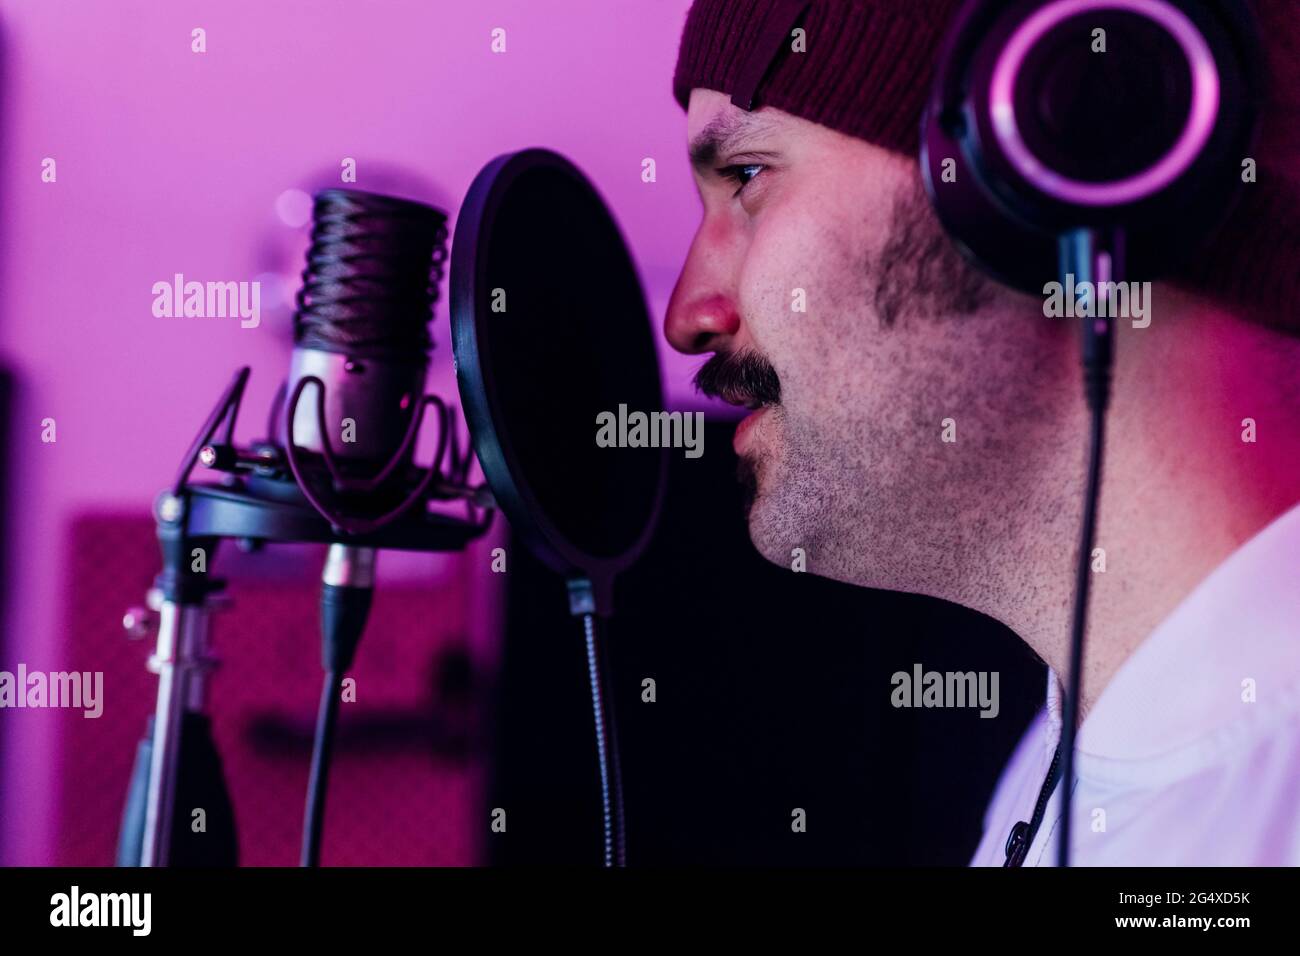 Male singer looking away while singing at studio Stock Photo